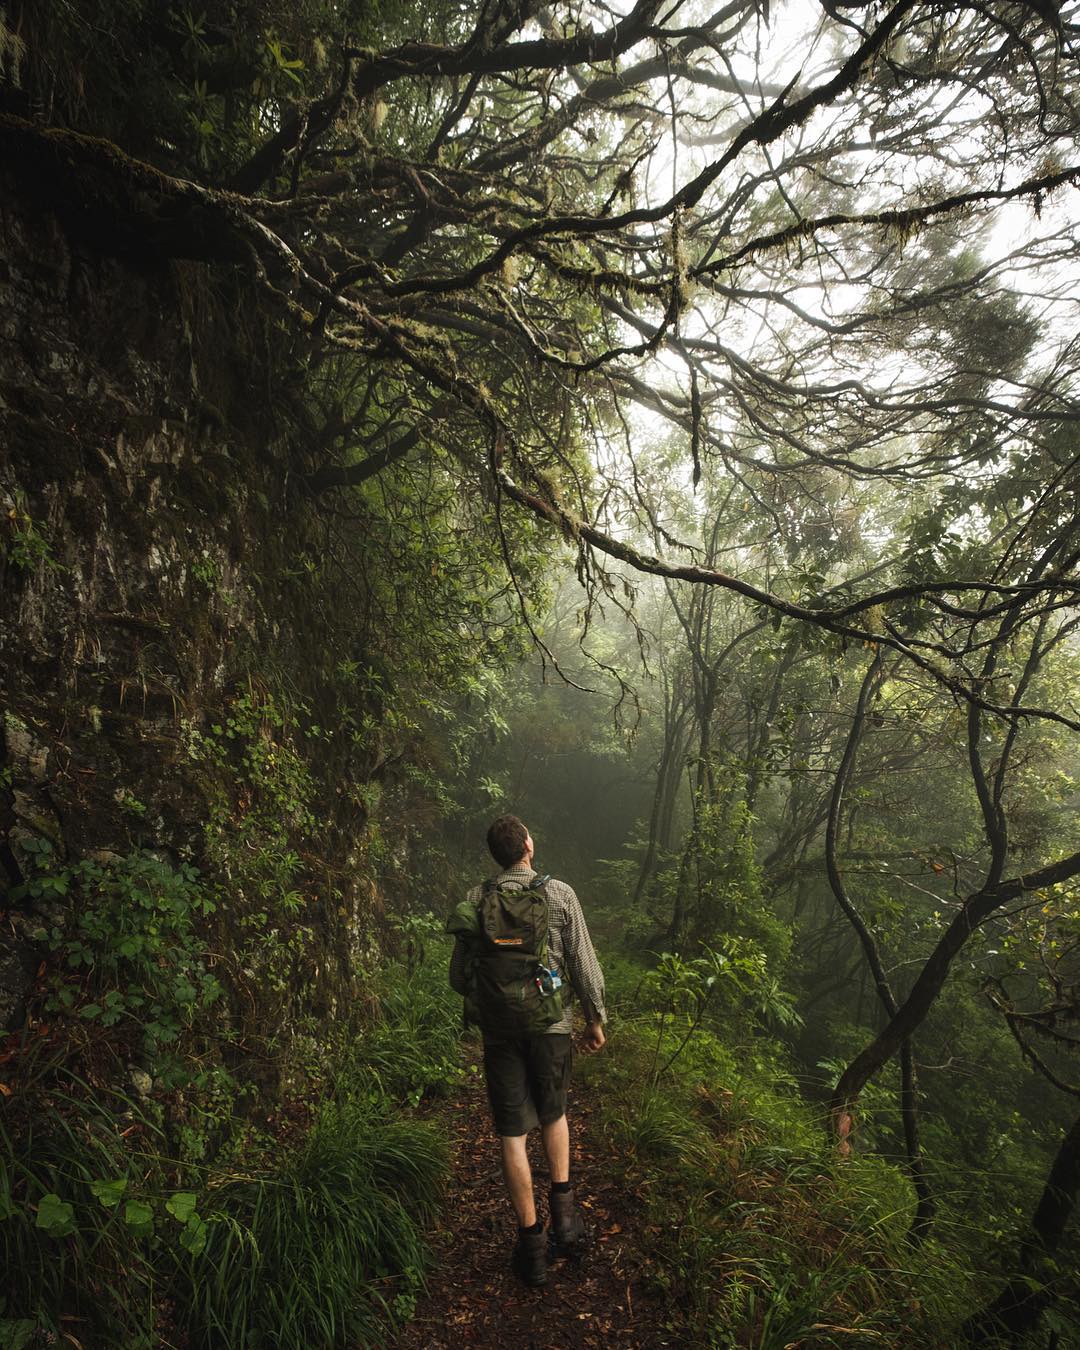 Brouzdat si ty traily snů .
——————————————————————
Walking on a dream.🙏
🌿

#budvdecny#ztracenvraji#tyjsitentvurce#denikcoffeeholika#pinguinoutdoor#junglediary
.
.
.
.
.
.
.
#profotkudoraje#zijusisvujsen#meditation#nature#mountains#fujifilm#landscape#hike#forest#jungle#greenplanet
#EarthOfficial#roamtheplanet#keepitwild#theglobewanderer#earthfocus#ourplanetdaily#stayandwander#folkvibe#foggy#neverstopexploring#czechroamers#ikoktejlcz#folkgreen @ikoktejlcz 
@fujifilmcz
@fujifoto.cz
@artofvisuals